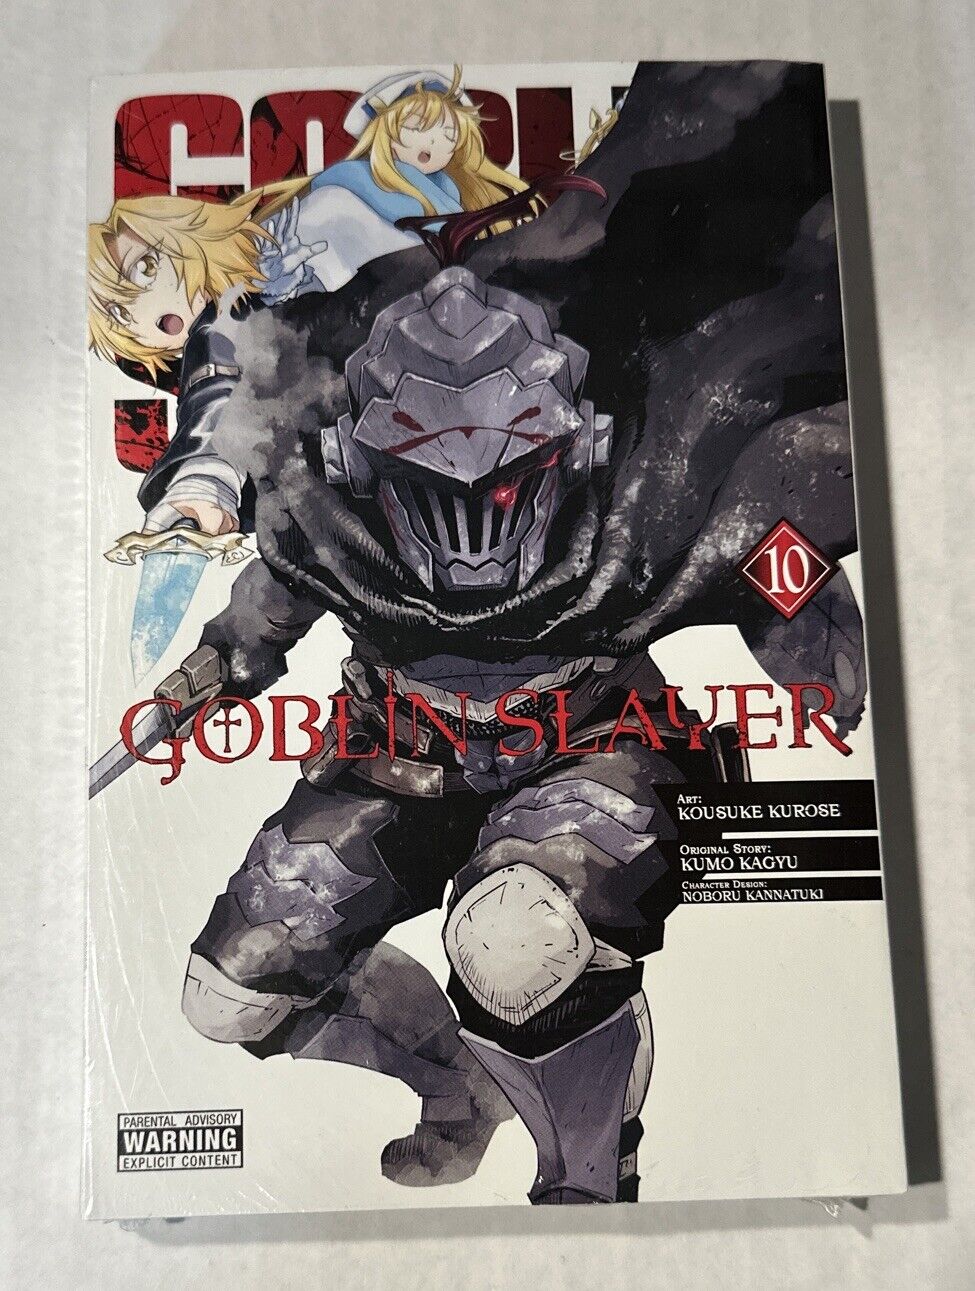 Goblin Slayer Volume 10 - Manga English - Explicit Content - Sealed New